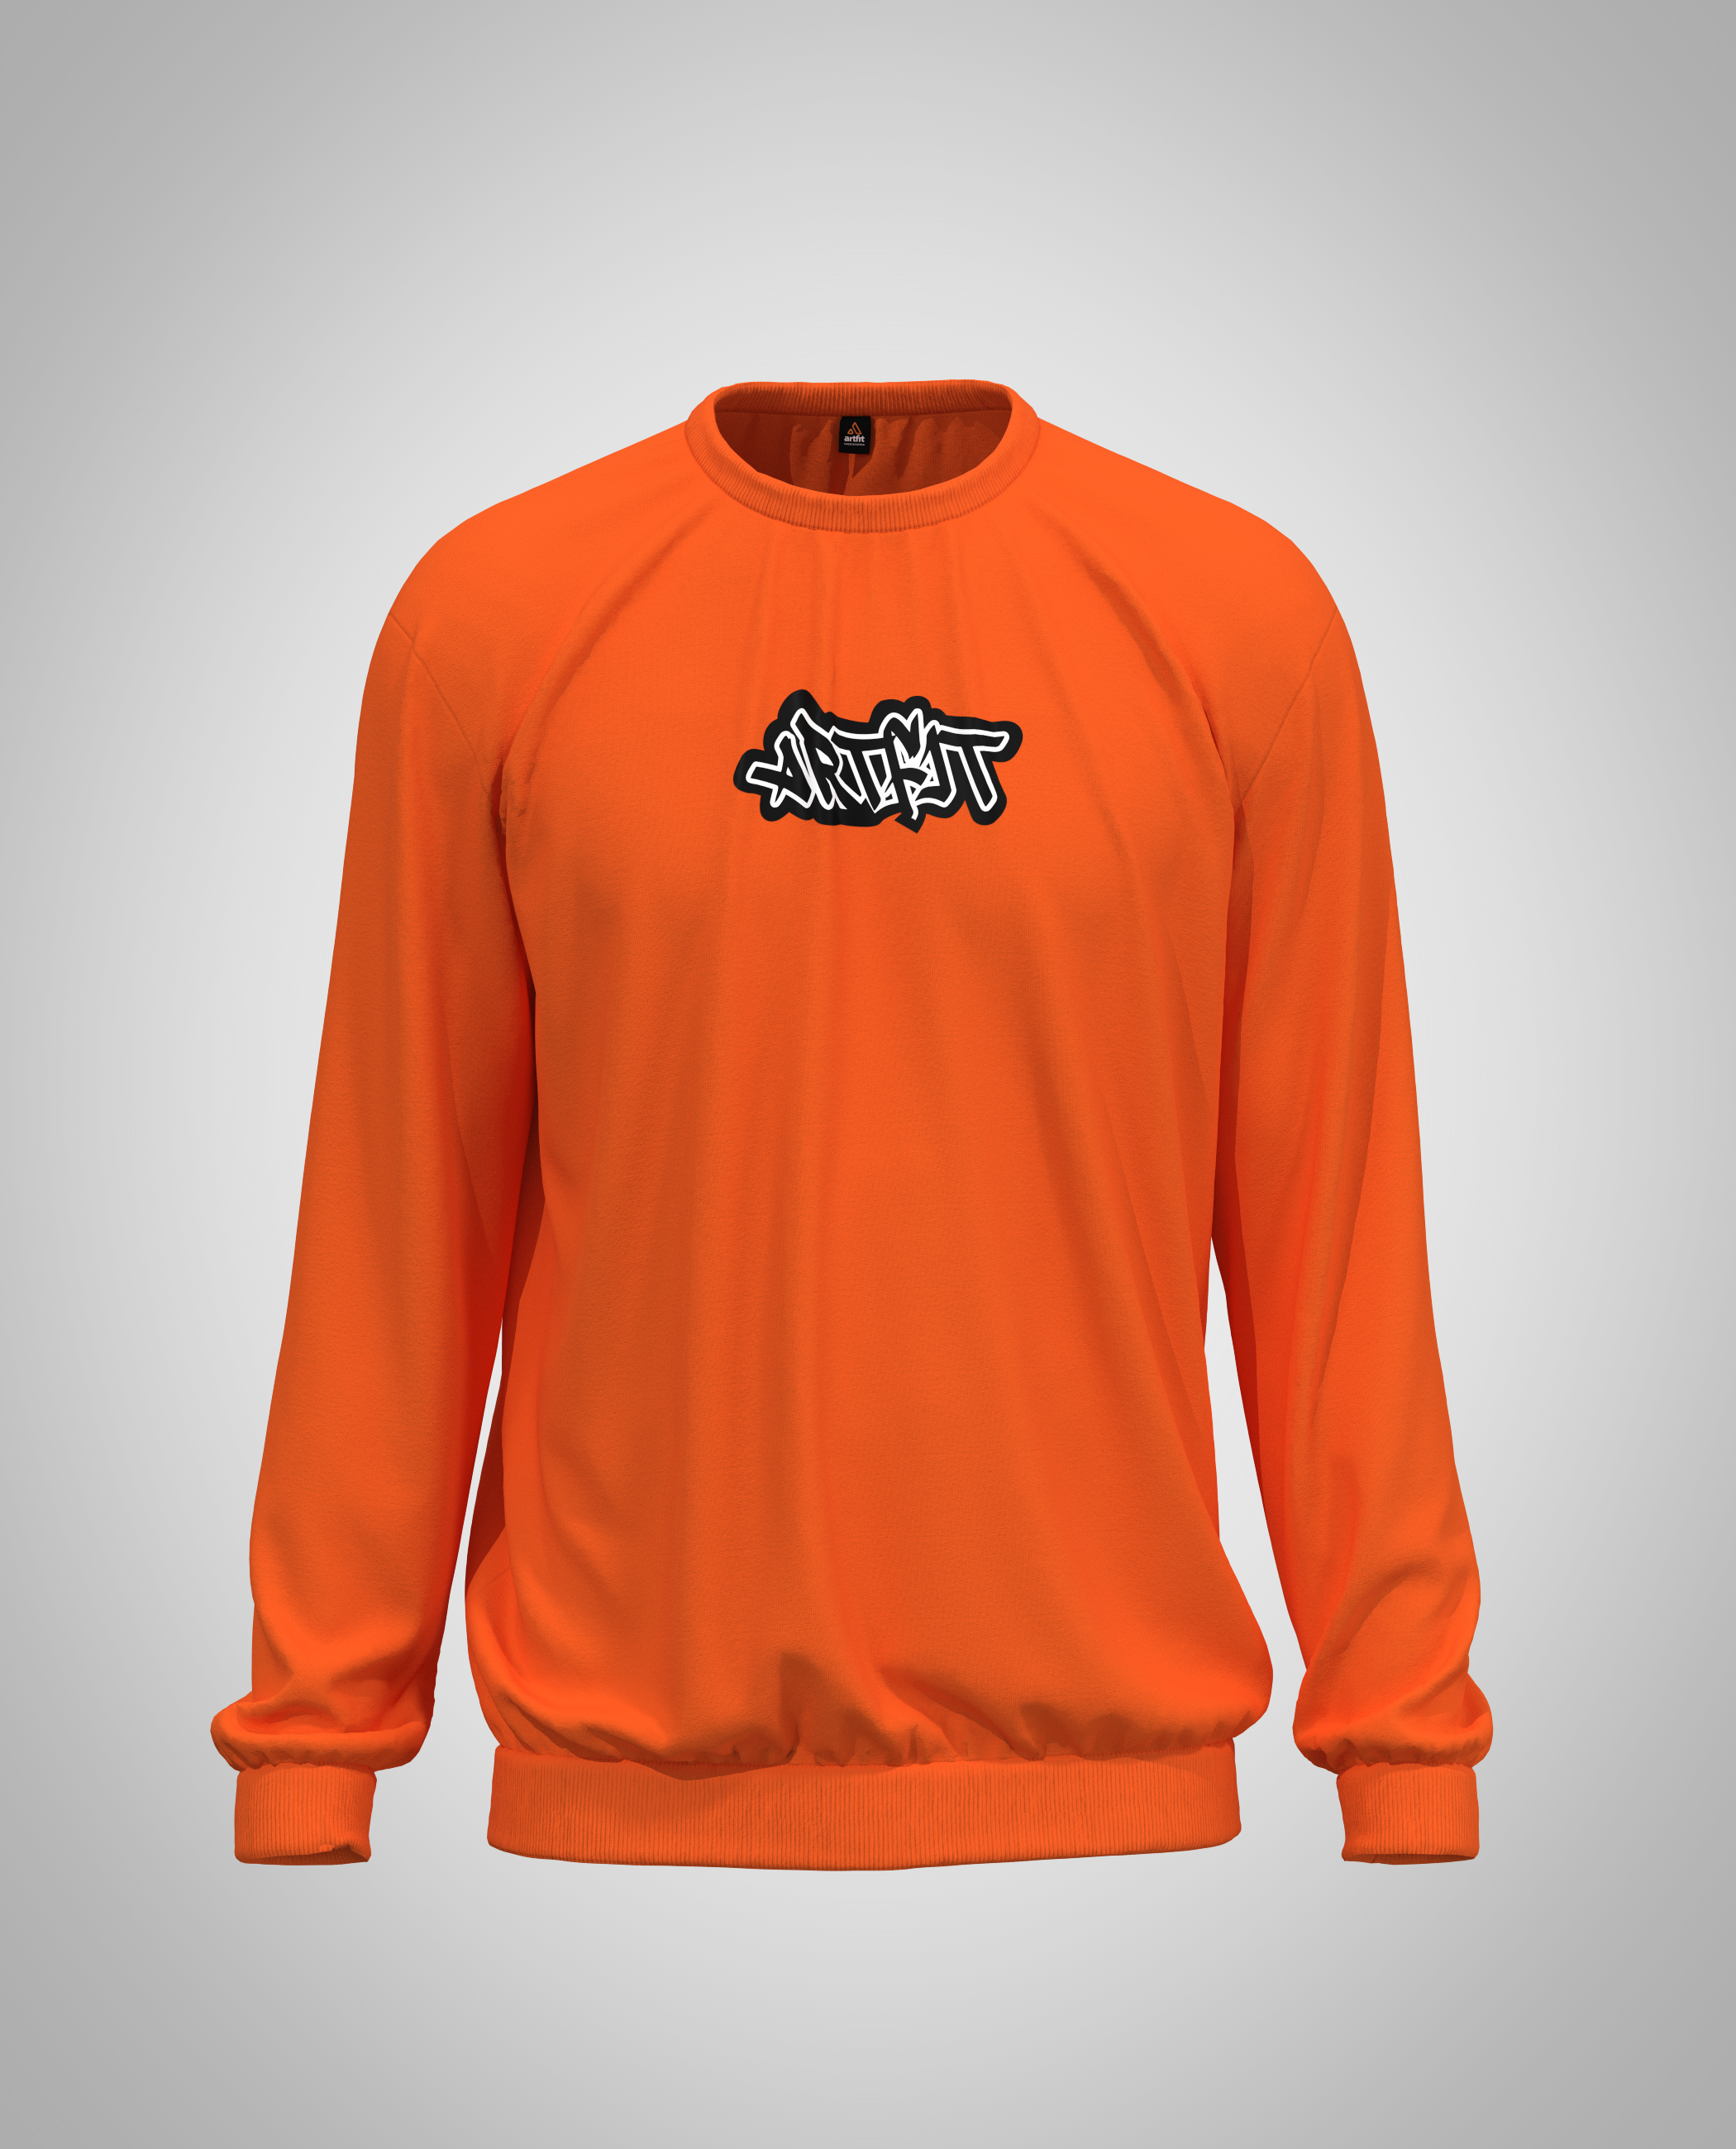 Kids Orange Sweatshirt(Heavy Fabric)